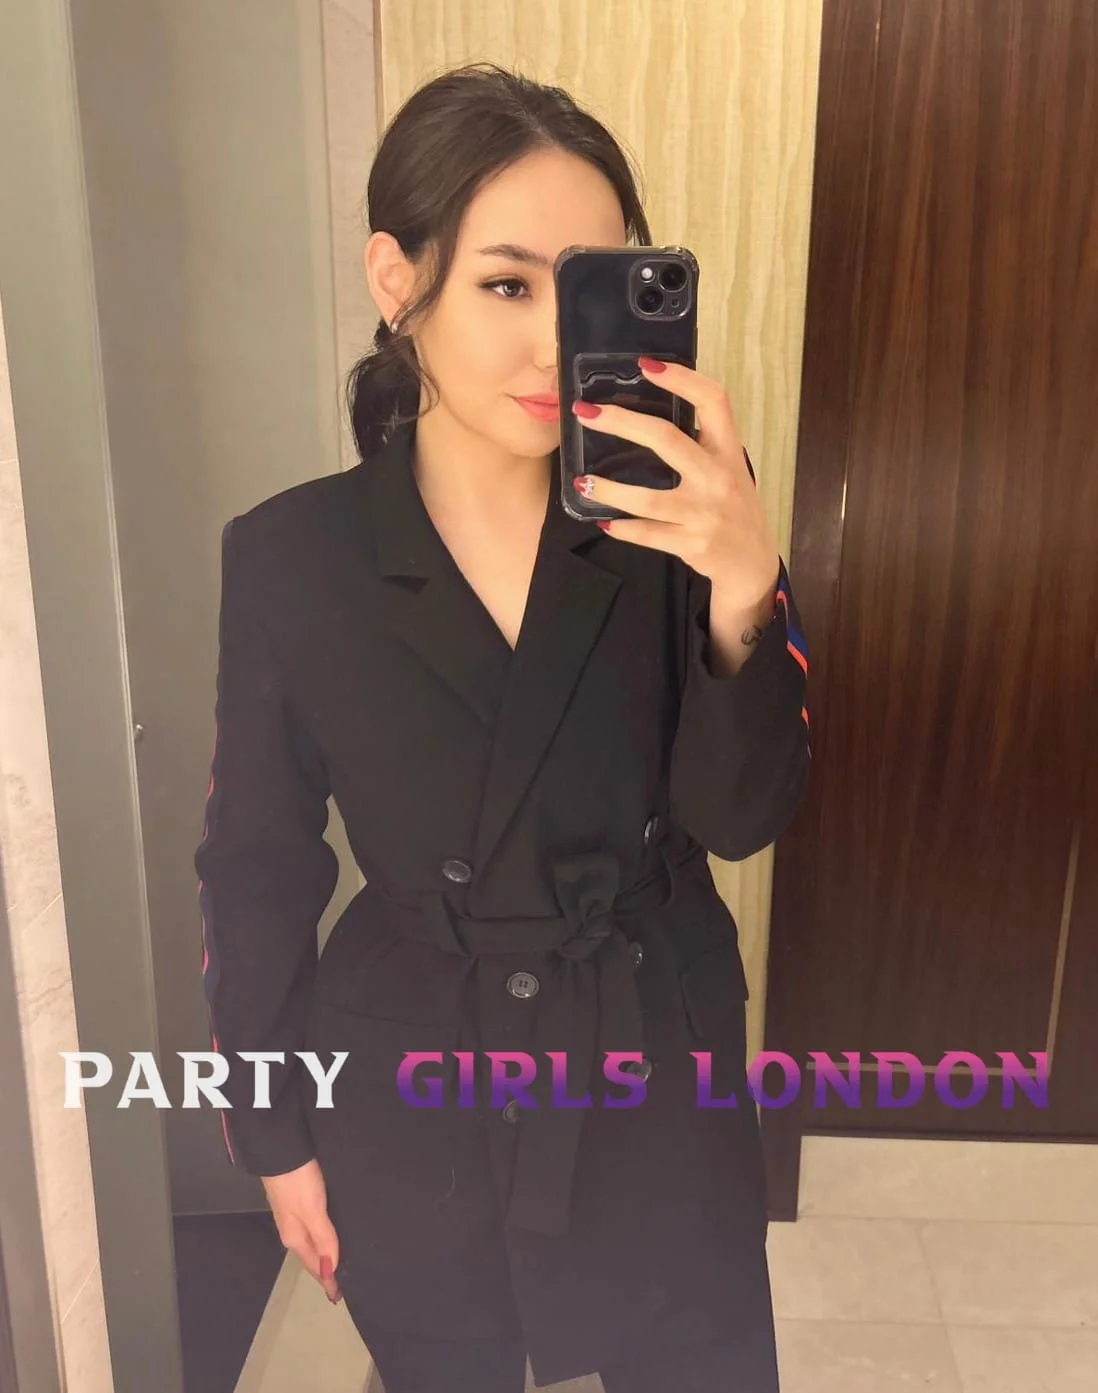 lisa-escort-party-girl-london-6